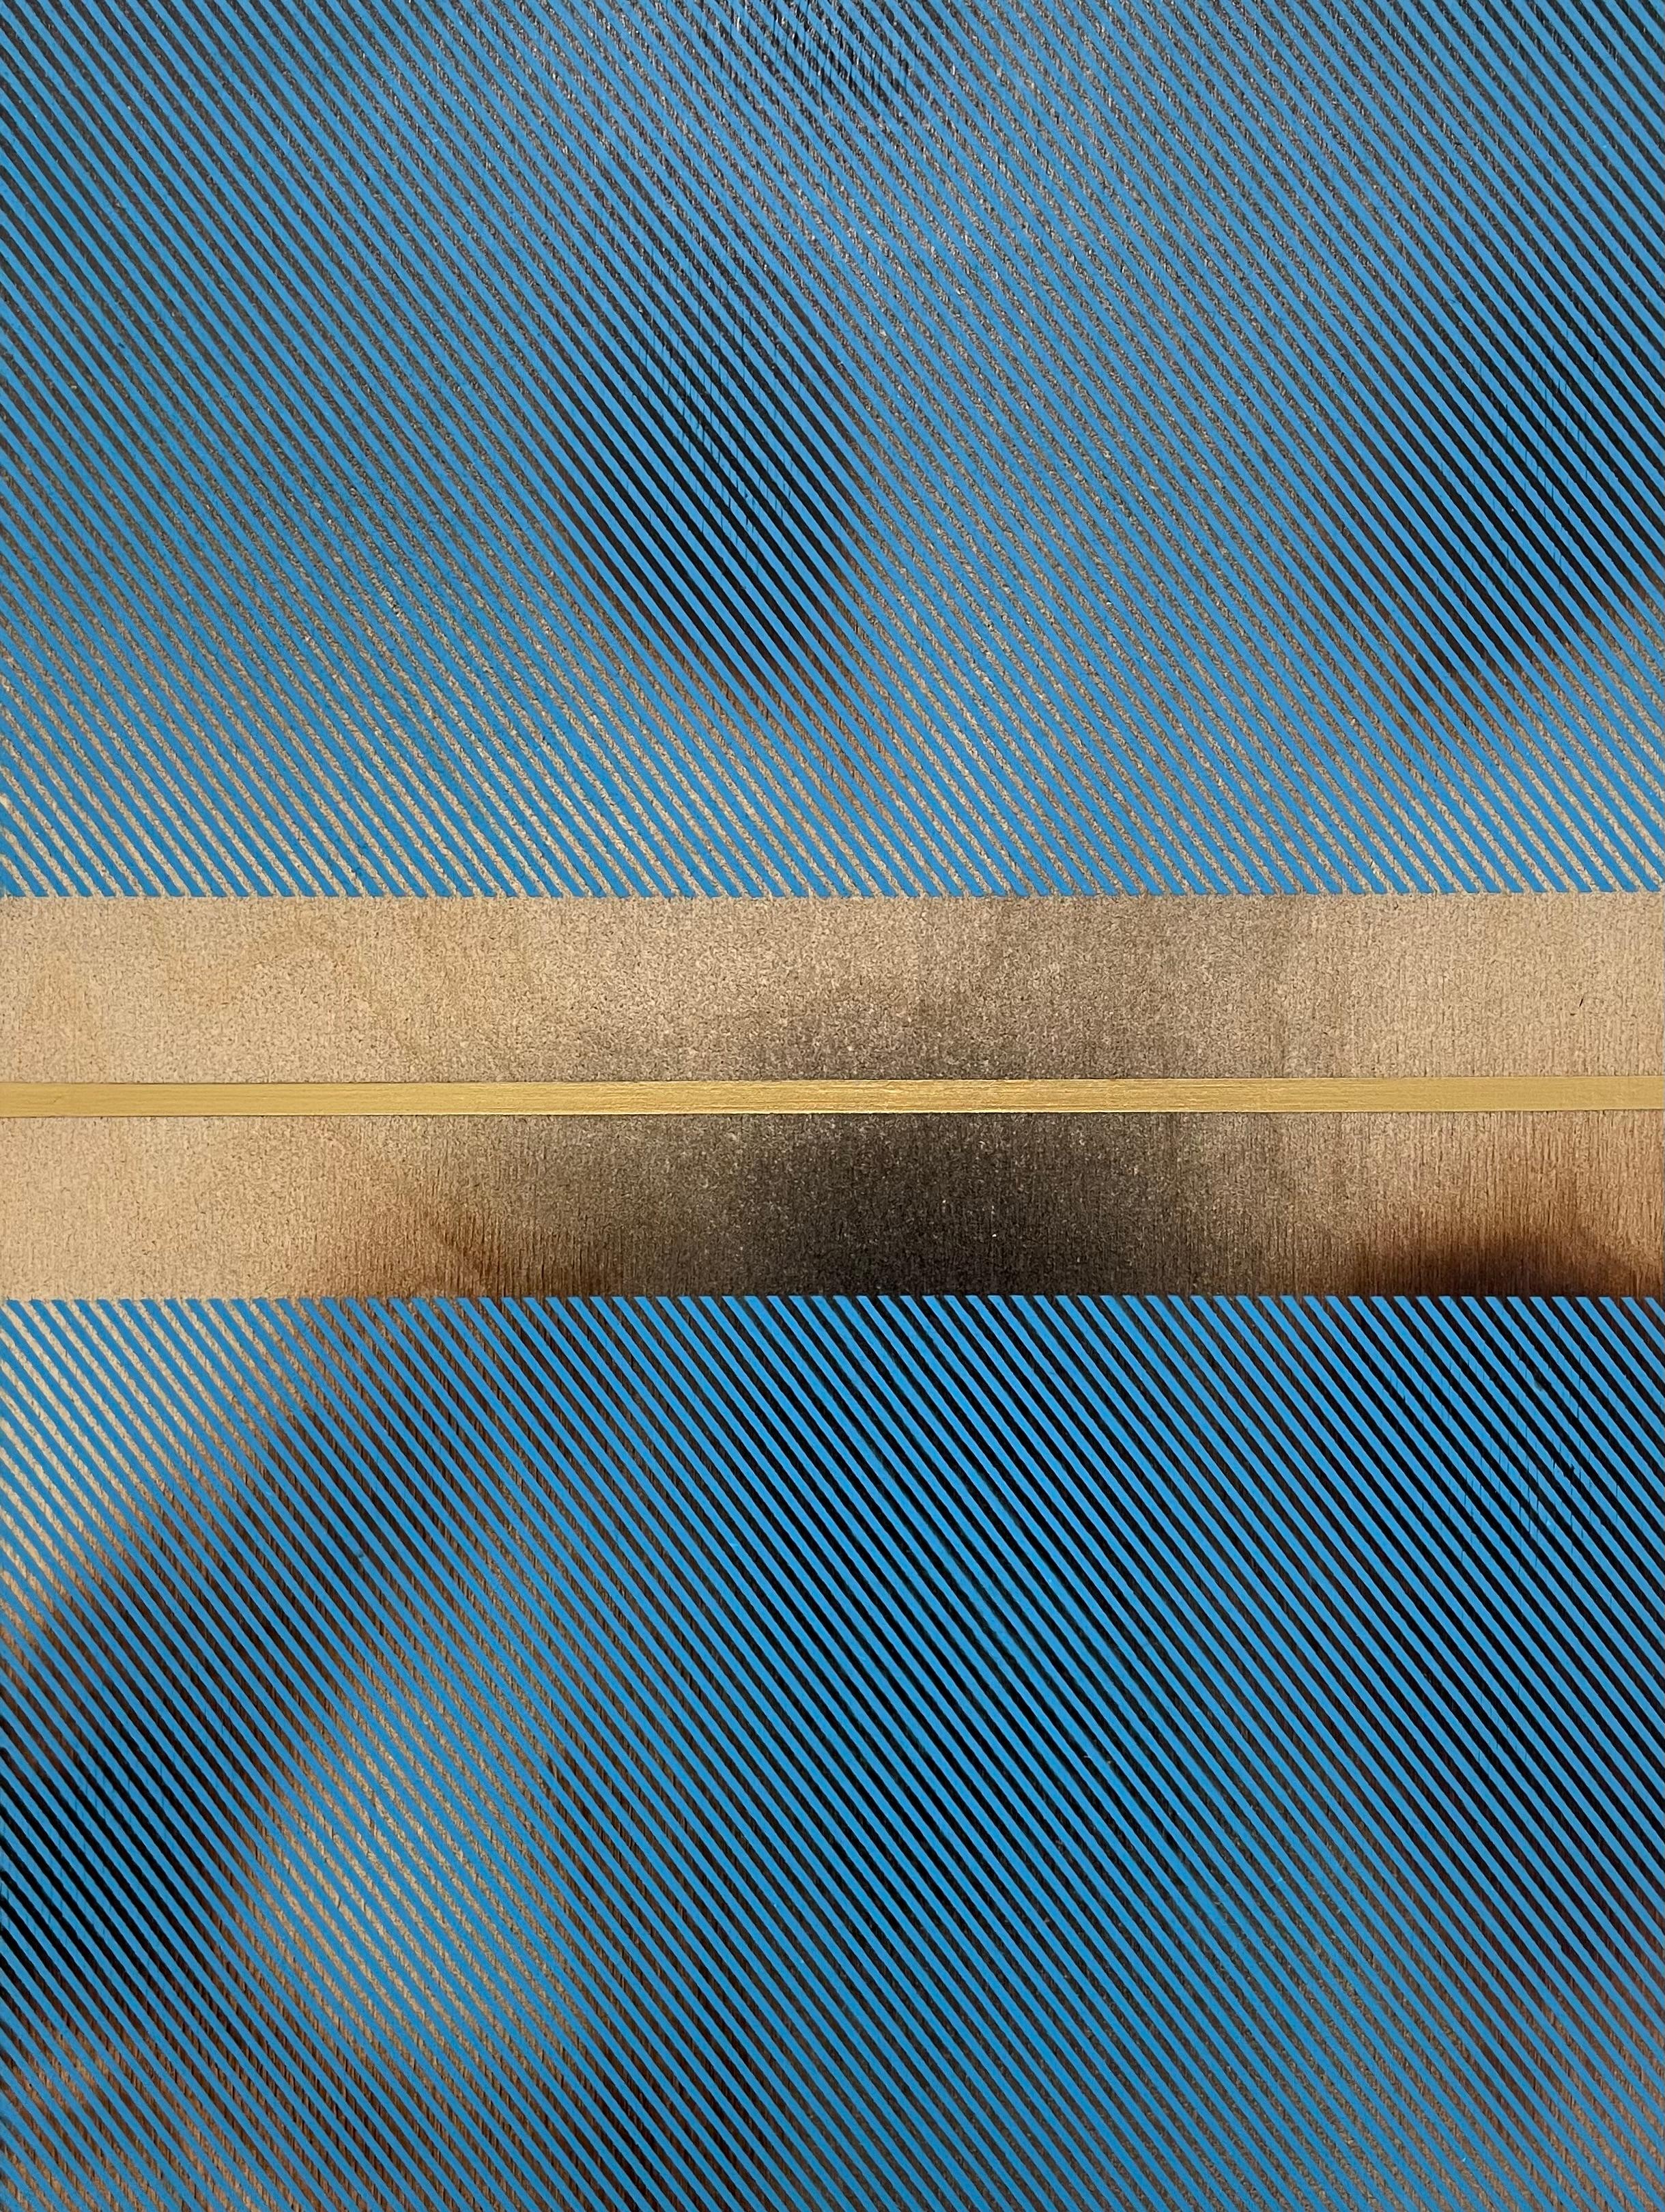 Sky Blue Mangata (grid painting minimal wood hard-edge dopamine color vibrant) - Mixed Media Art by Melisa Taylor Metzger